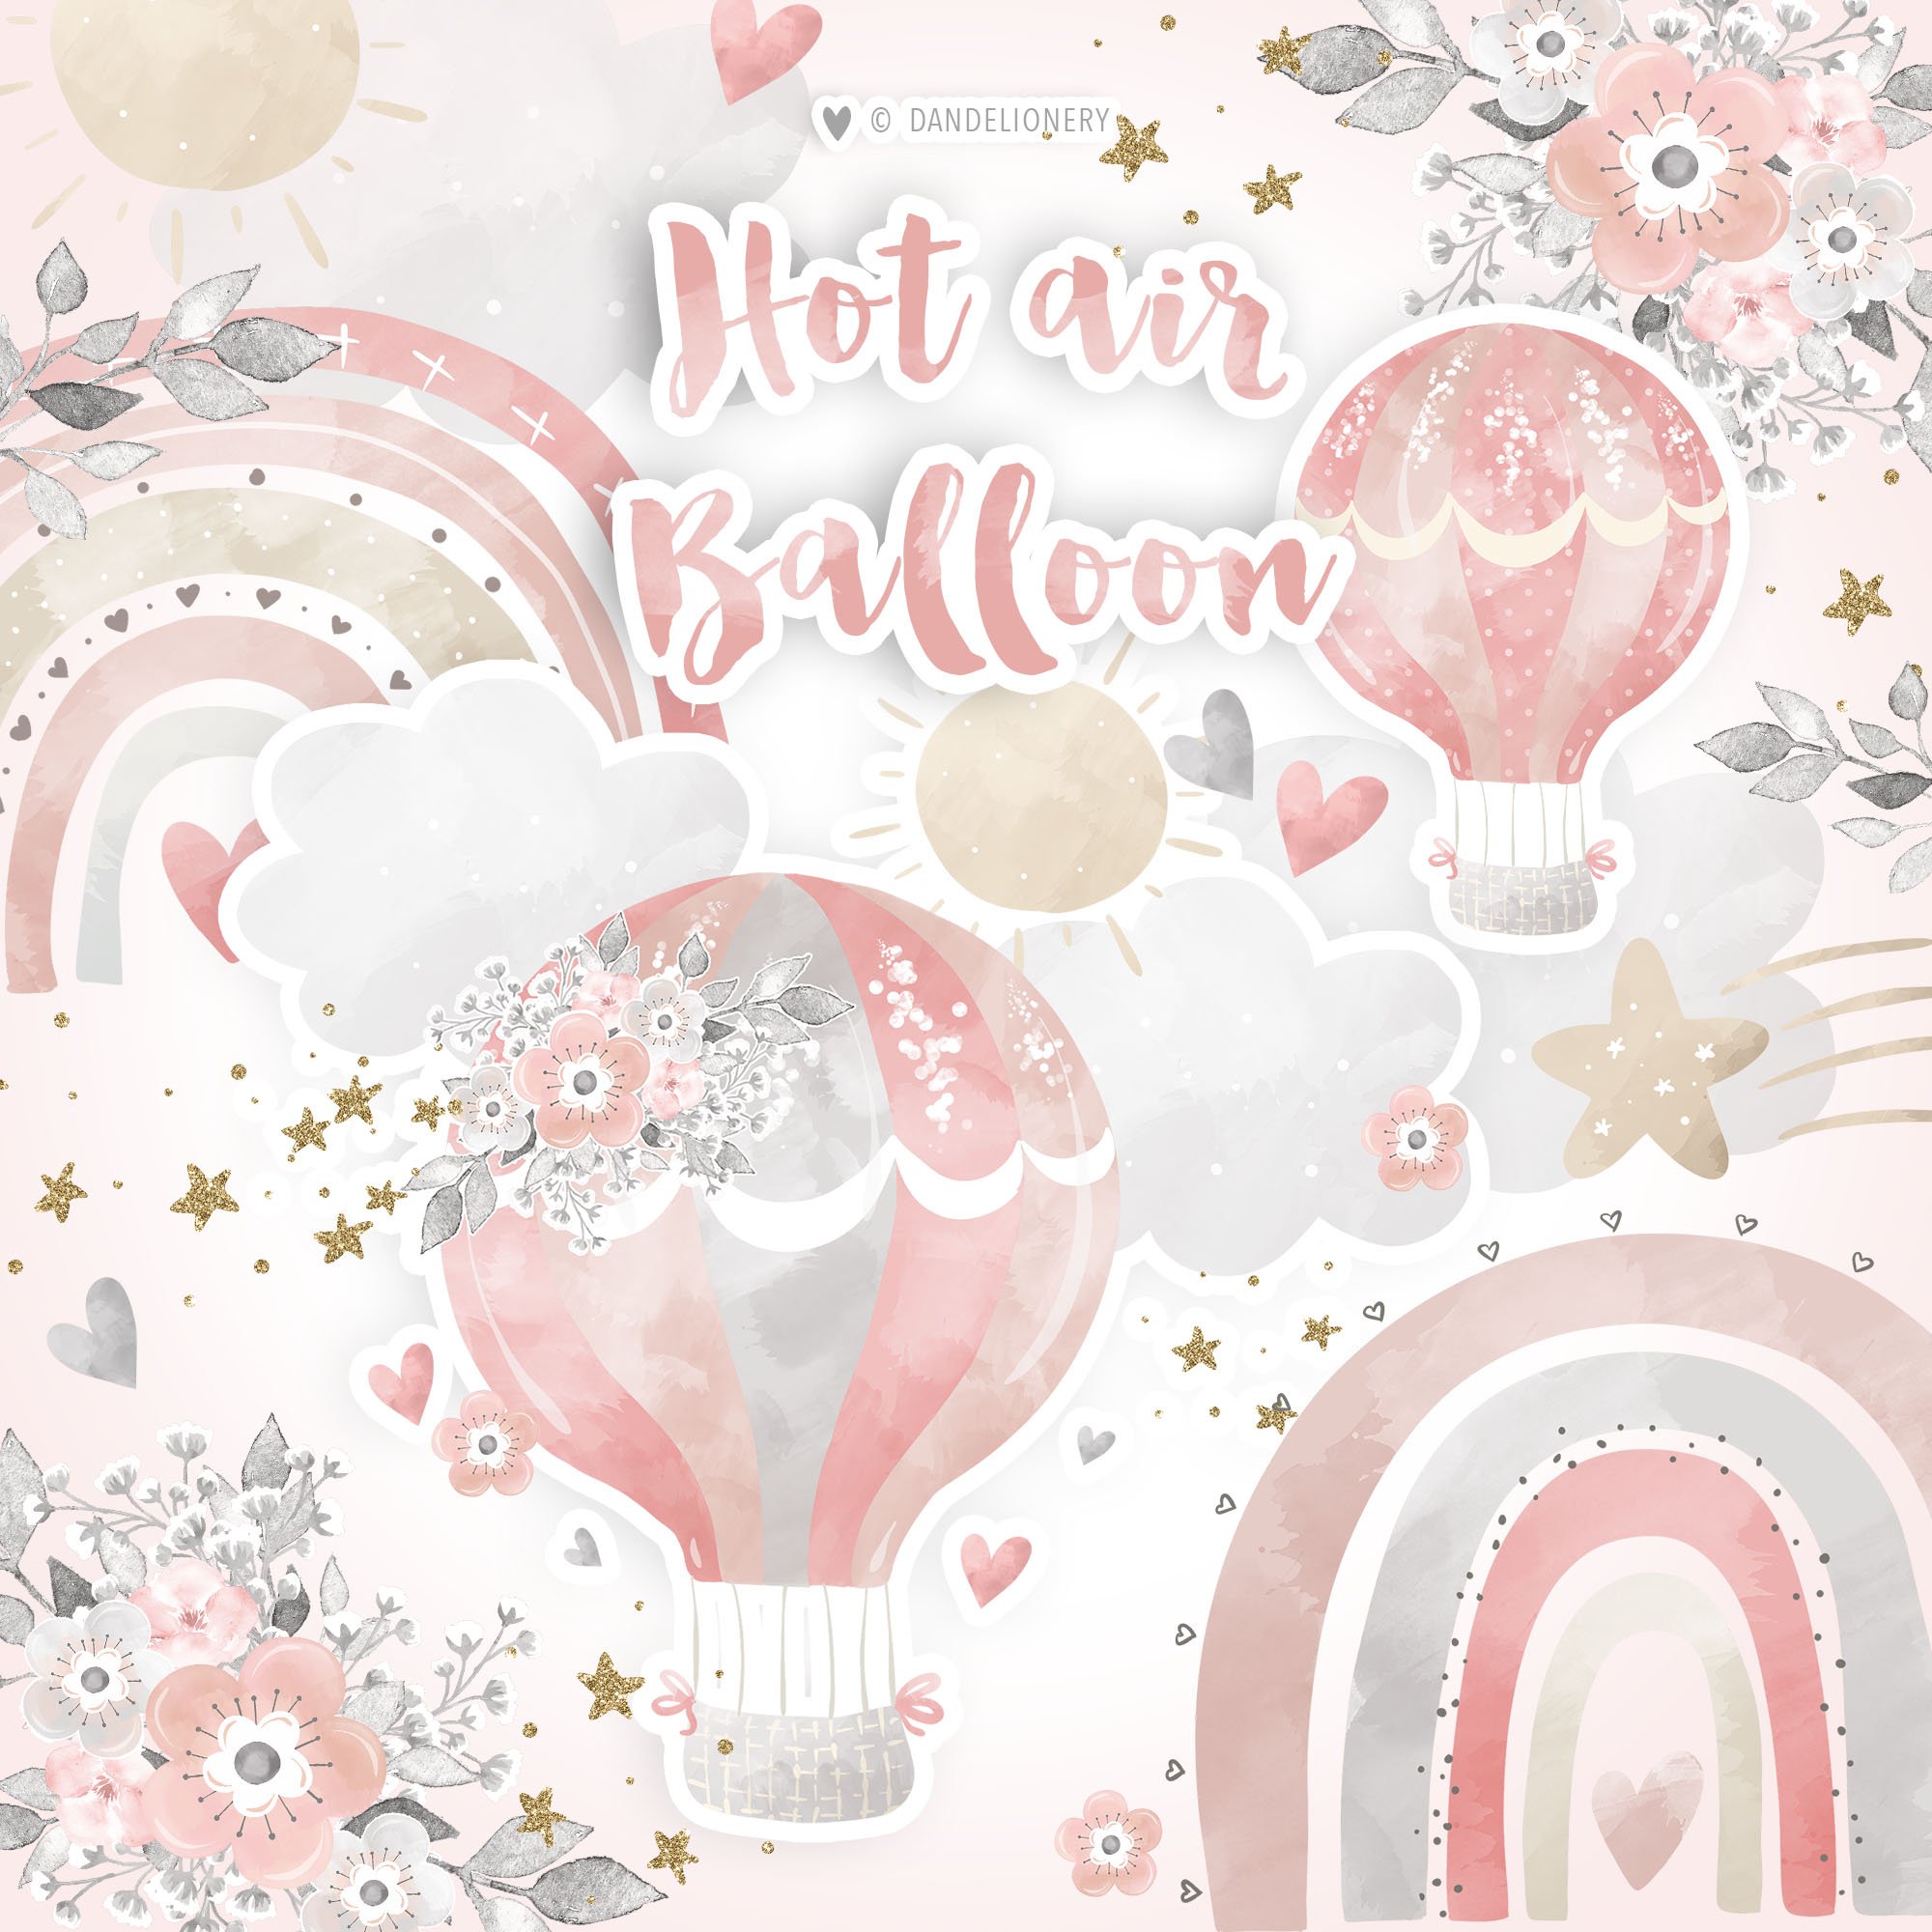 Hot Air Balloon design preview image.